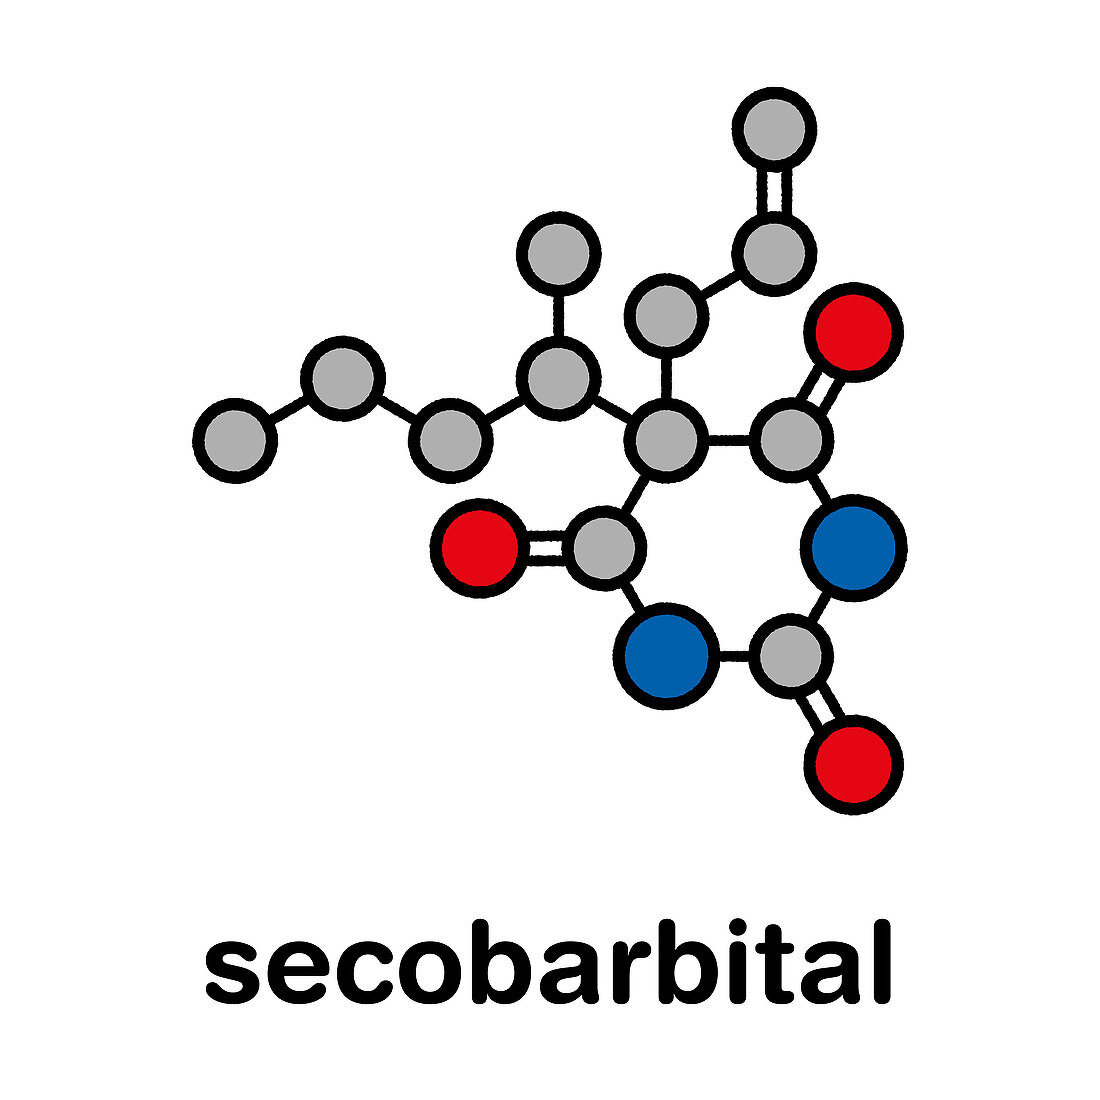 Secobarbital barbiturate sedative molecule, illustration